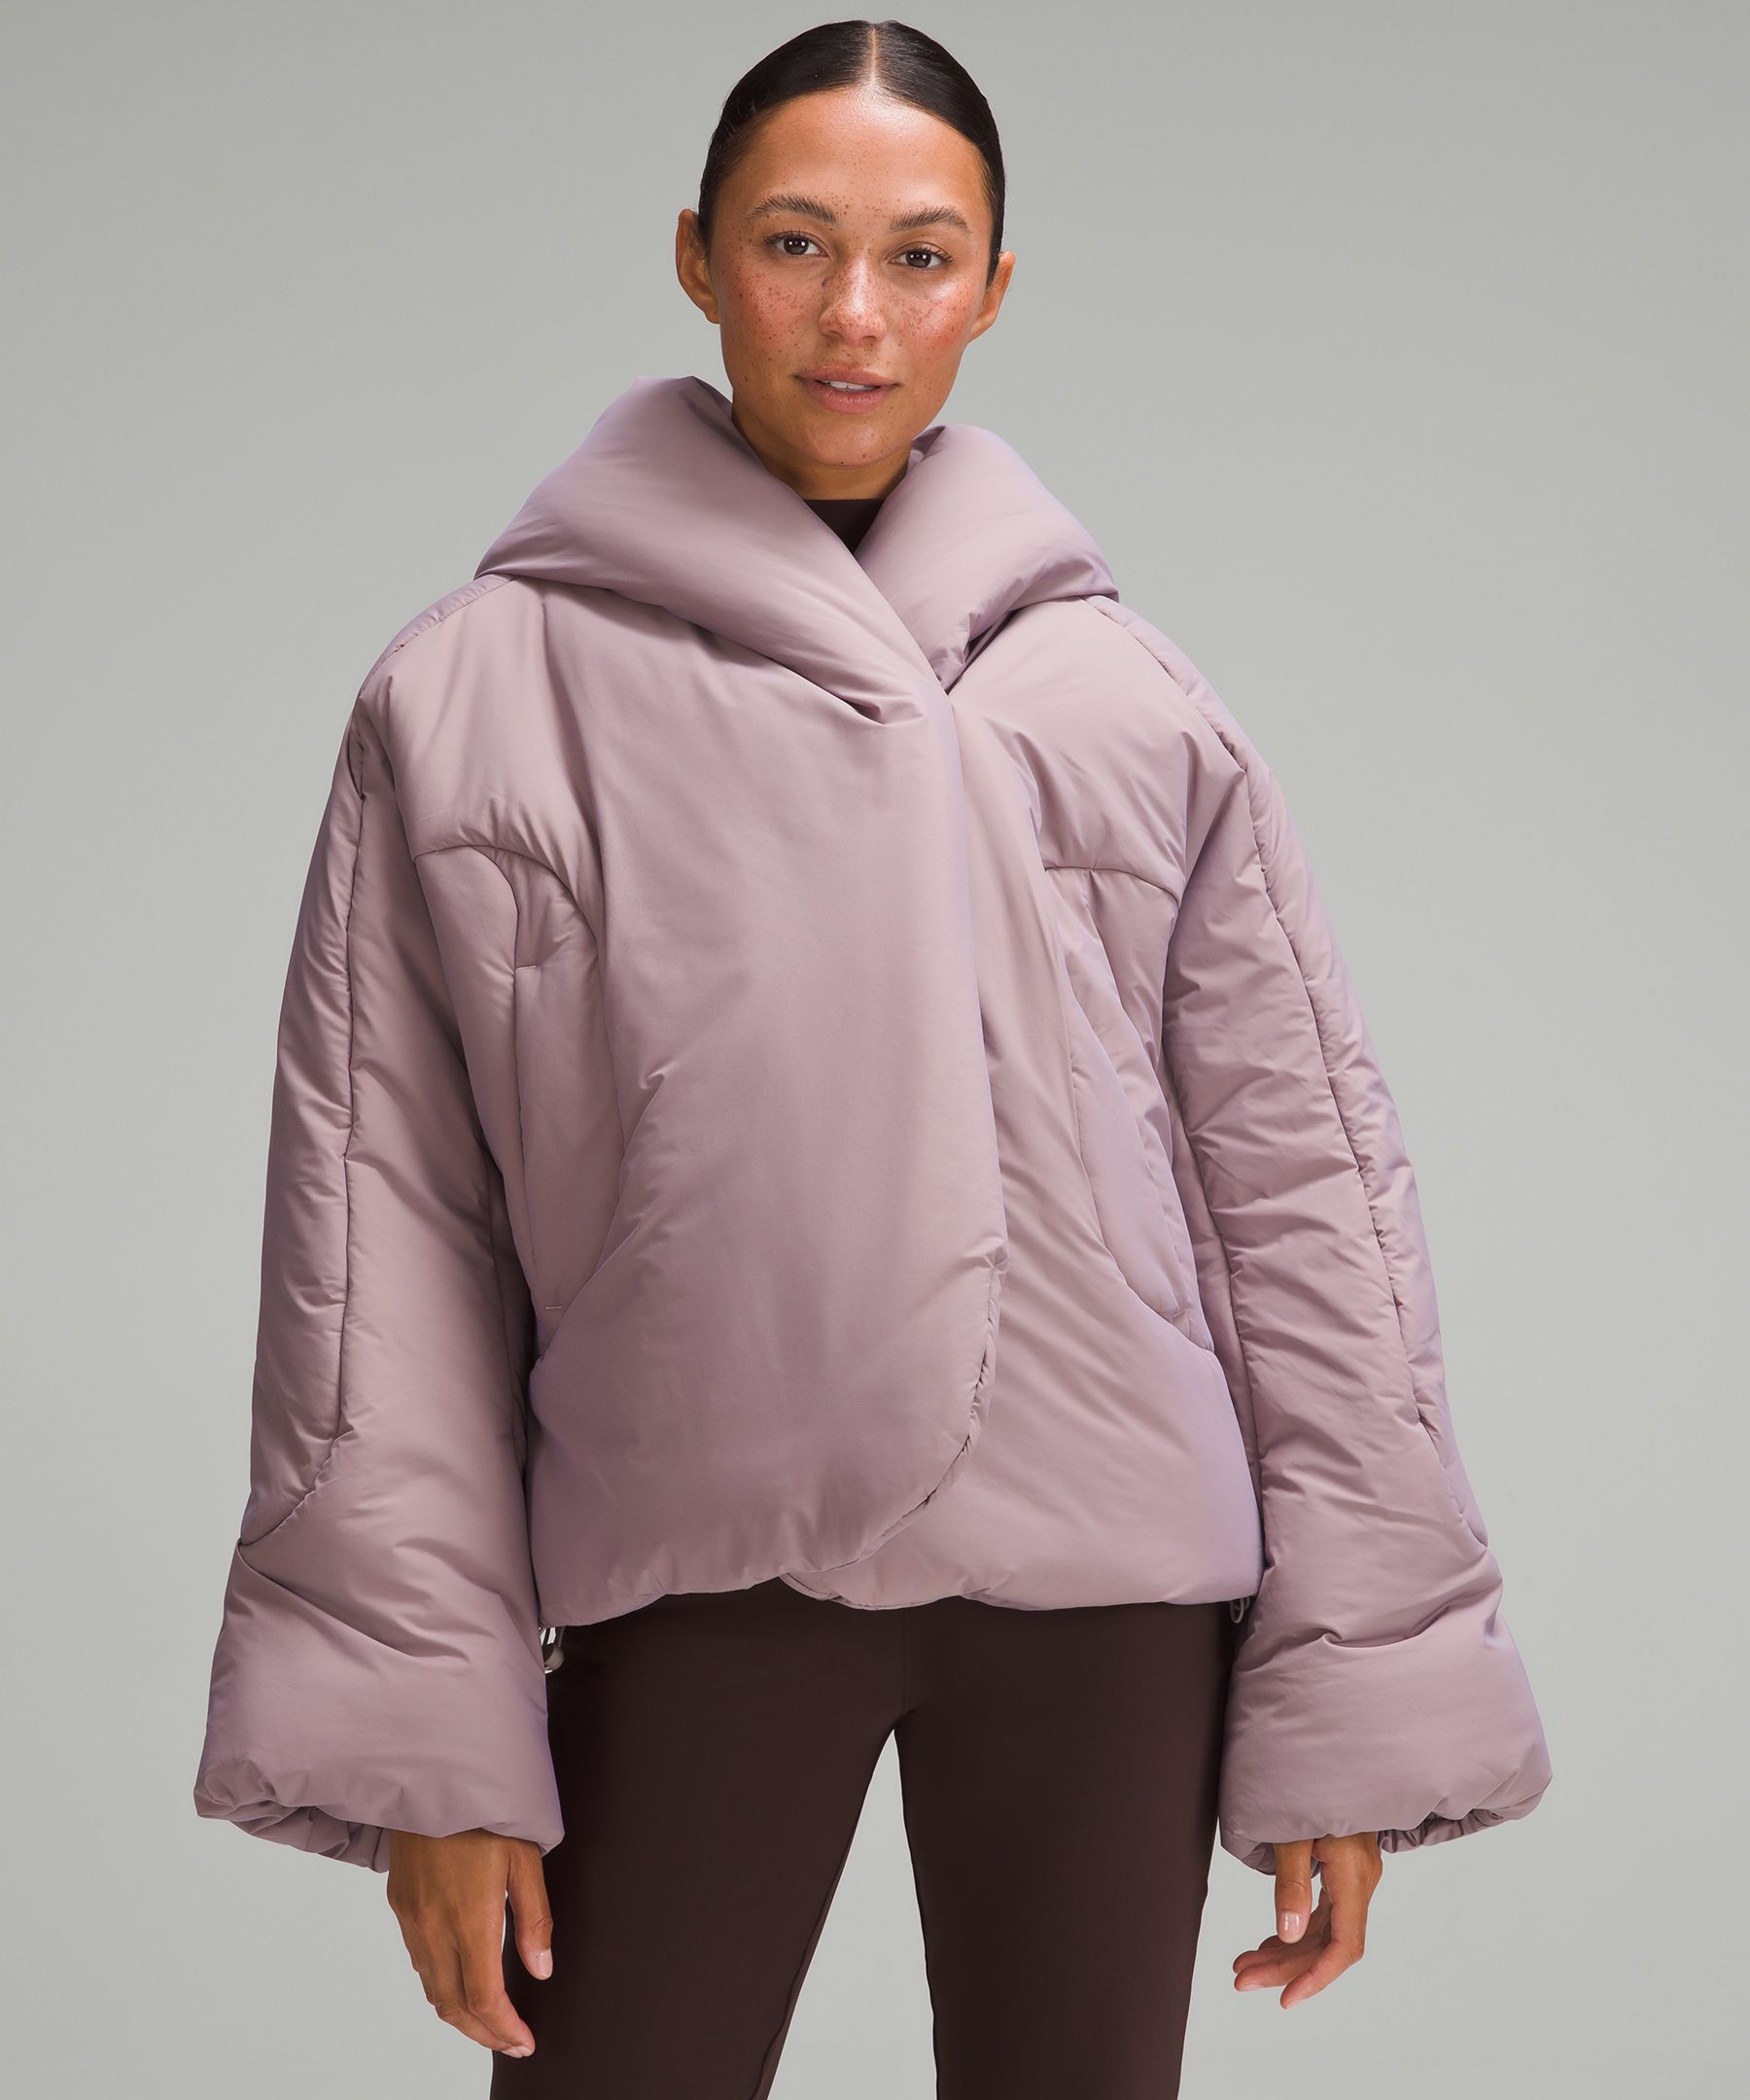 Nils Womens Hooded Full Zipper Rain Jacket Pink Size 2 - Shop Linda's Stuff